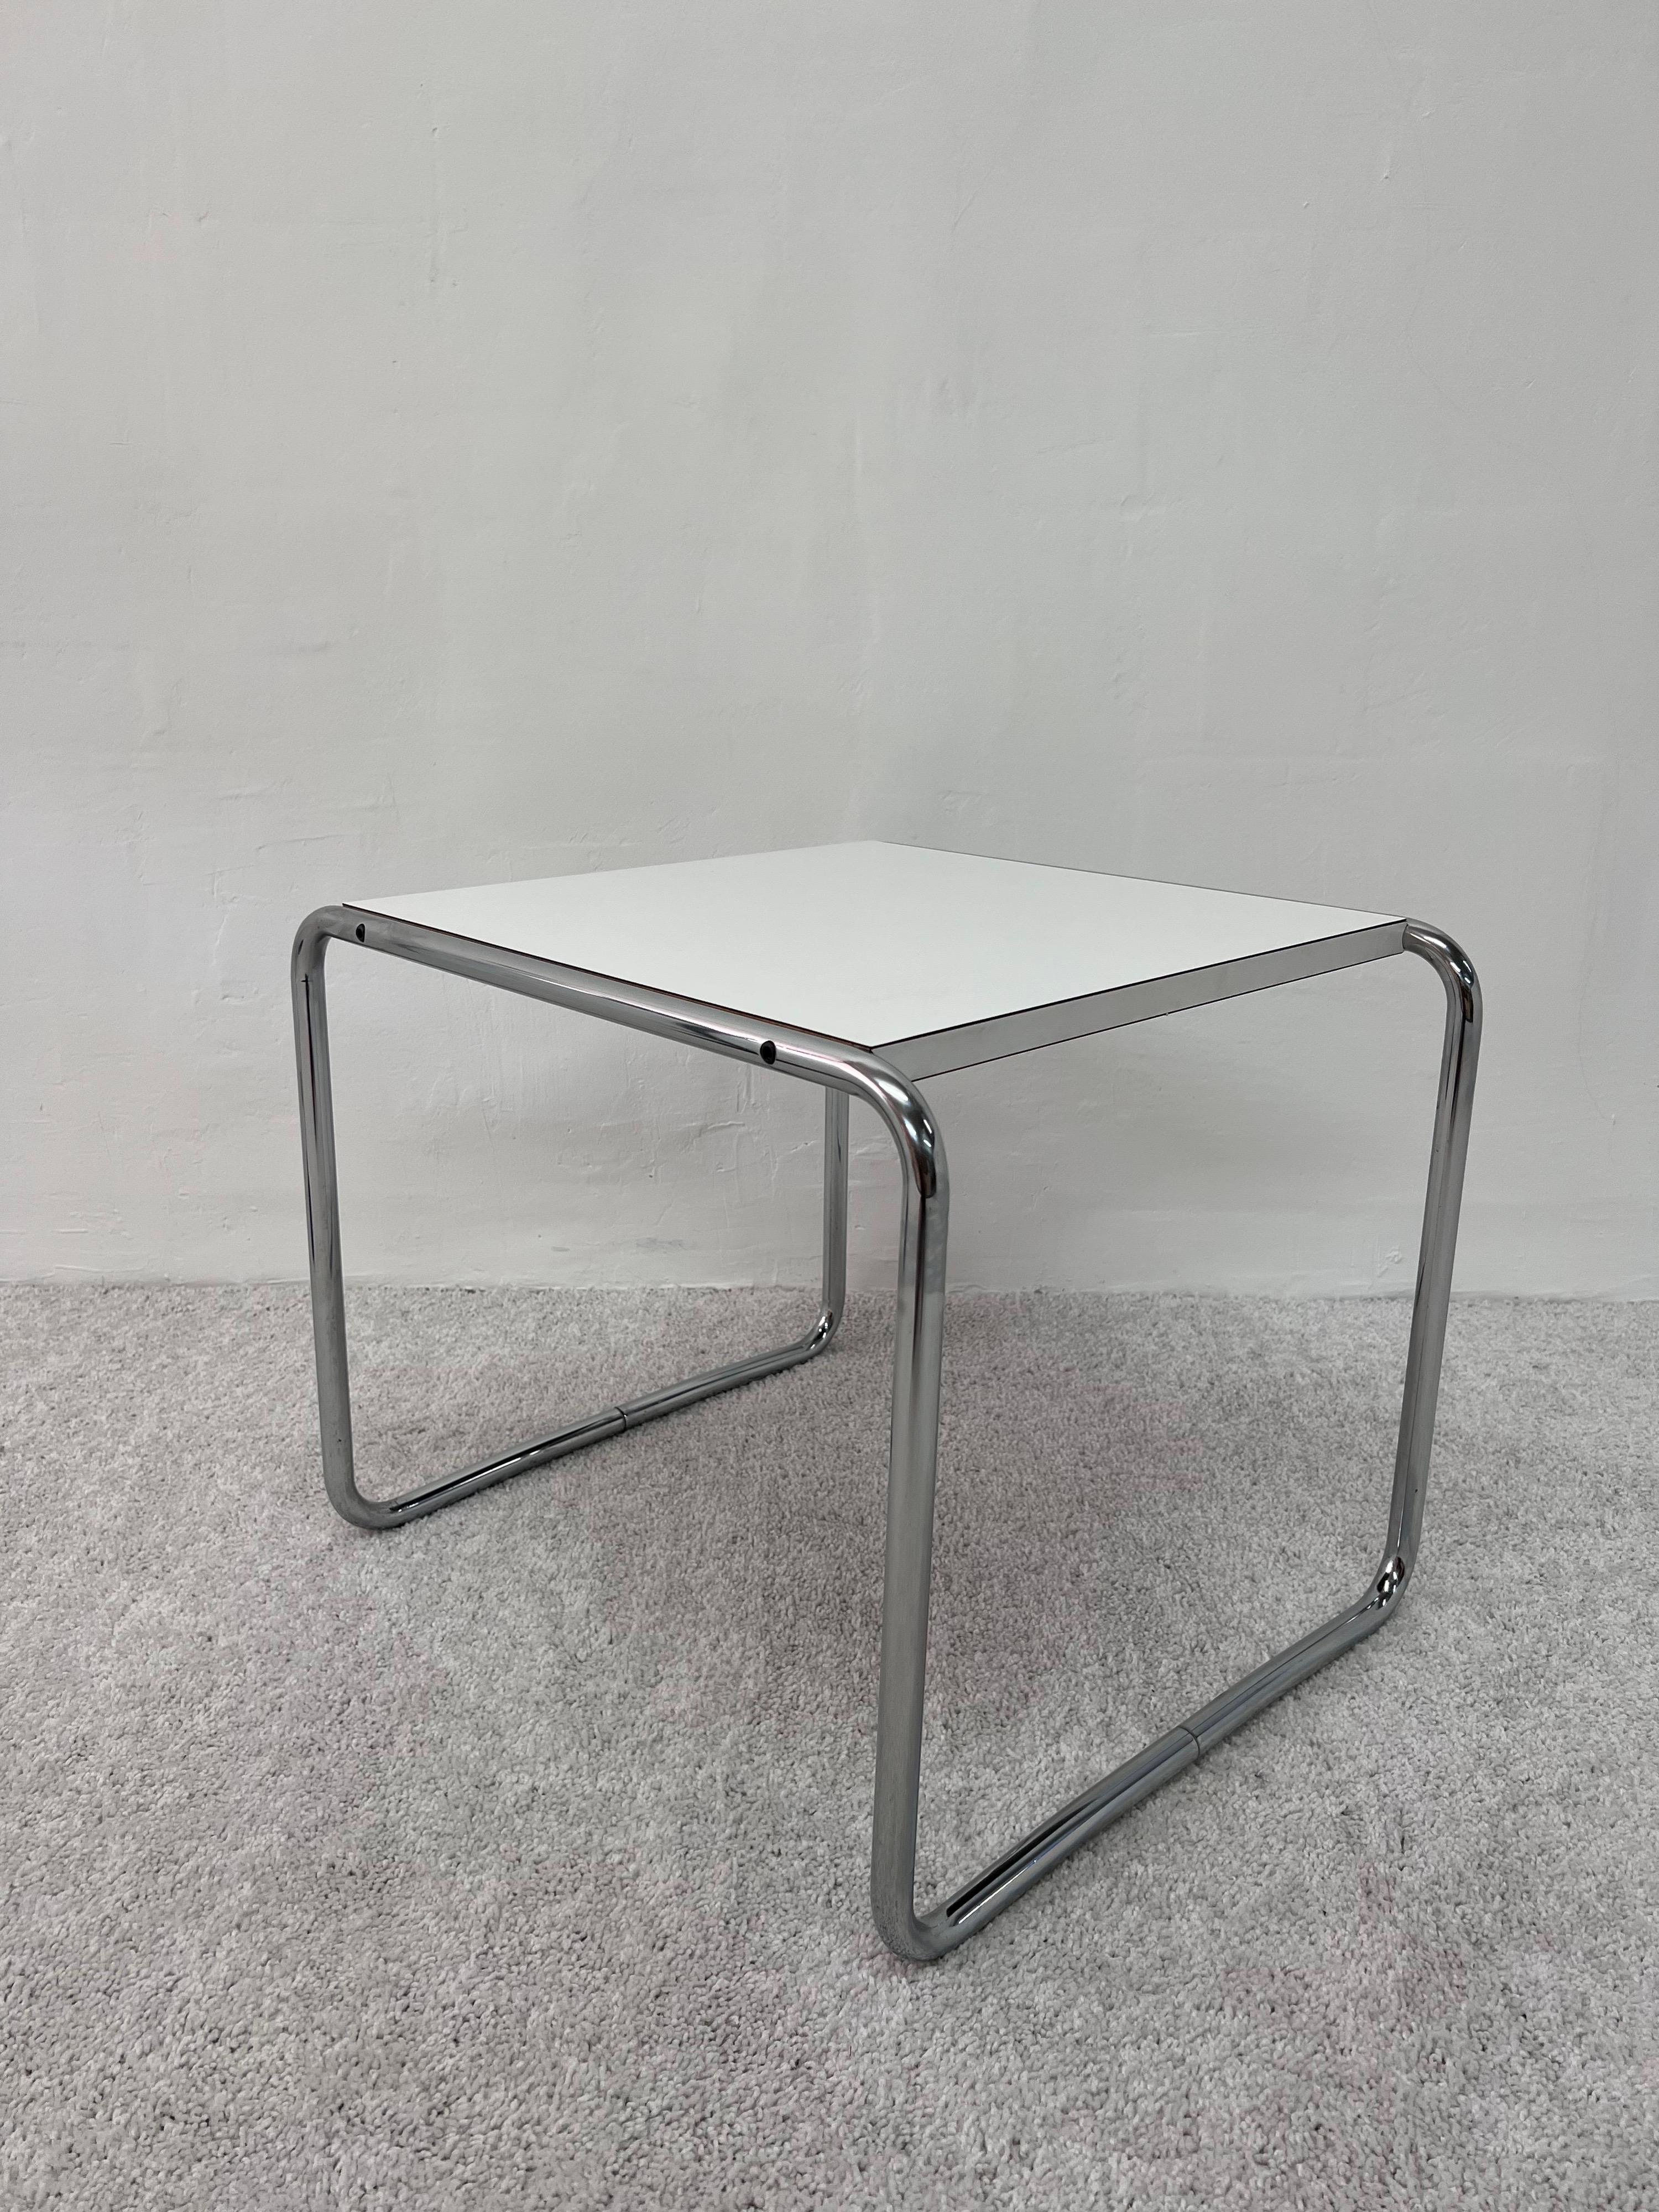 20th Century Marcel Breuer “Laccio” Chrome and Laminate Side Tables, 1960s